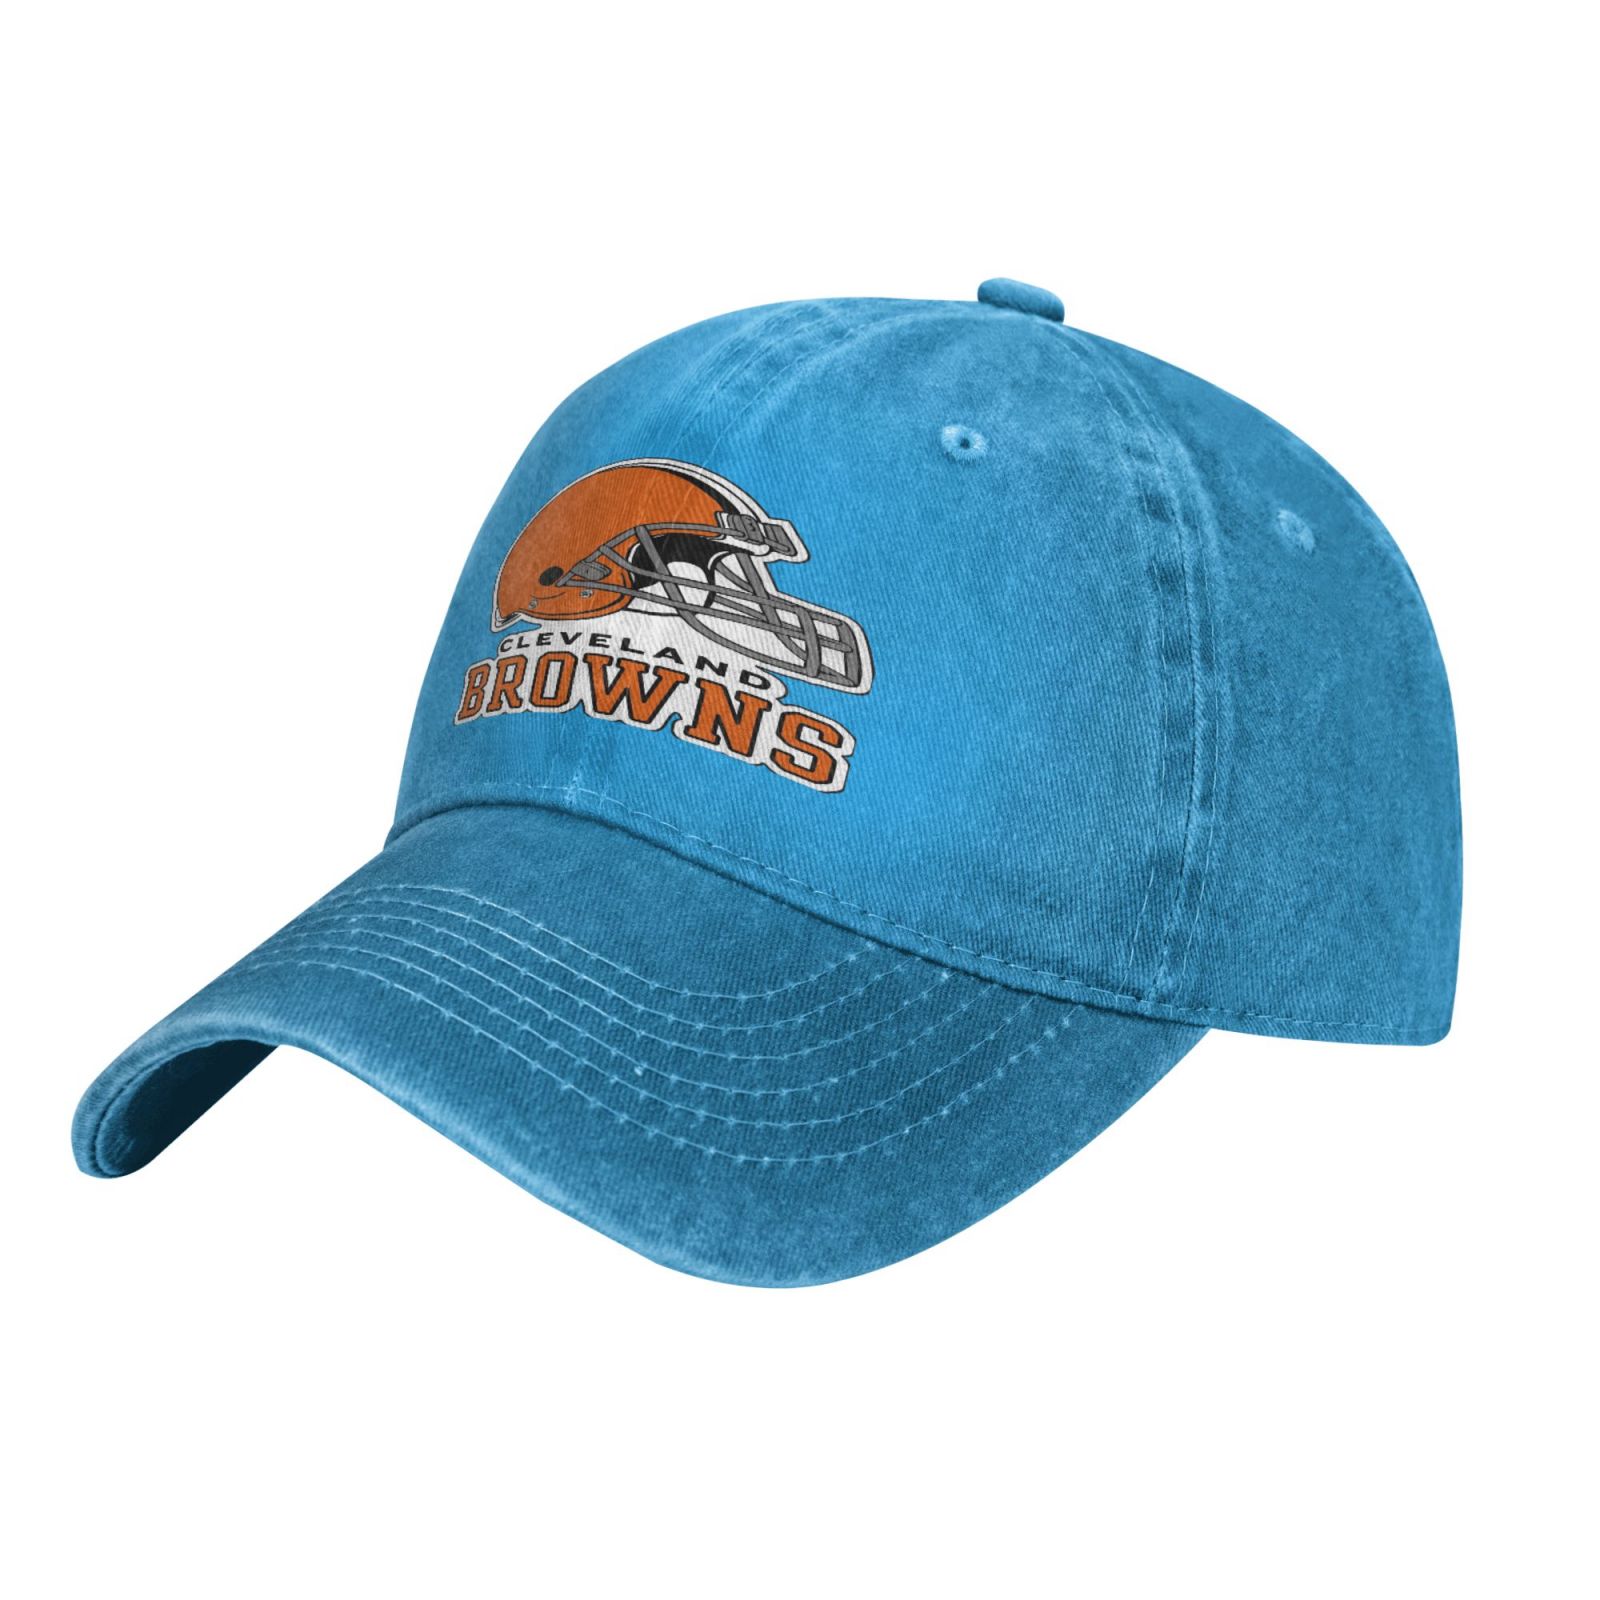 Cleveland-Browns Baseball Cap Adjustable Hat Sun Shade Peaked Cap ...